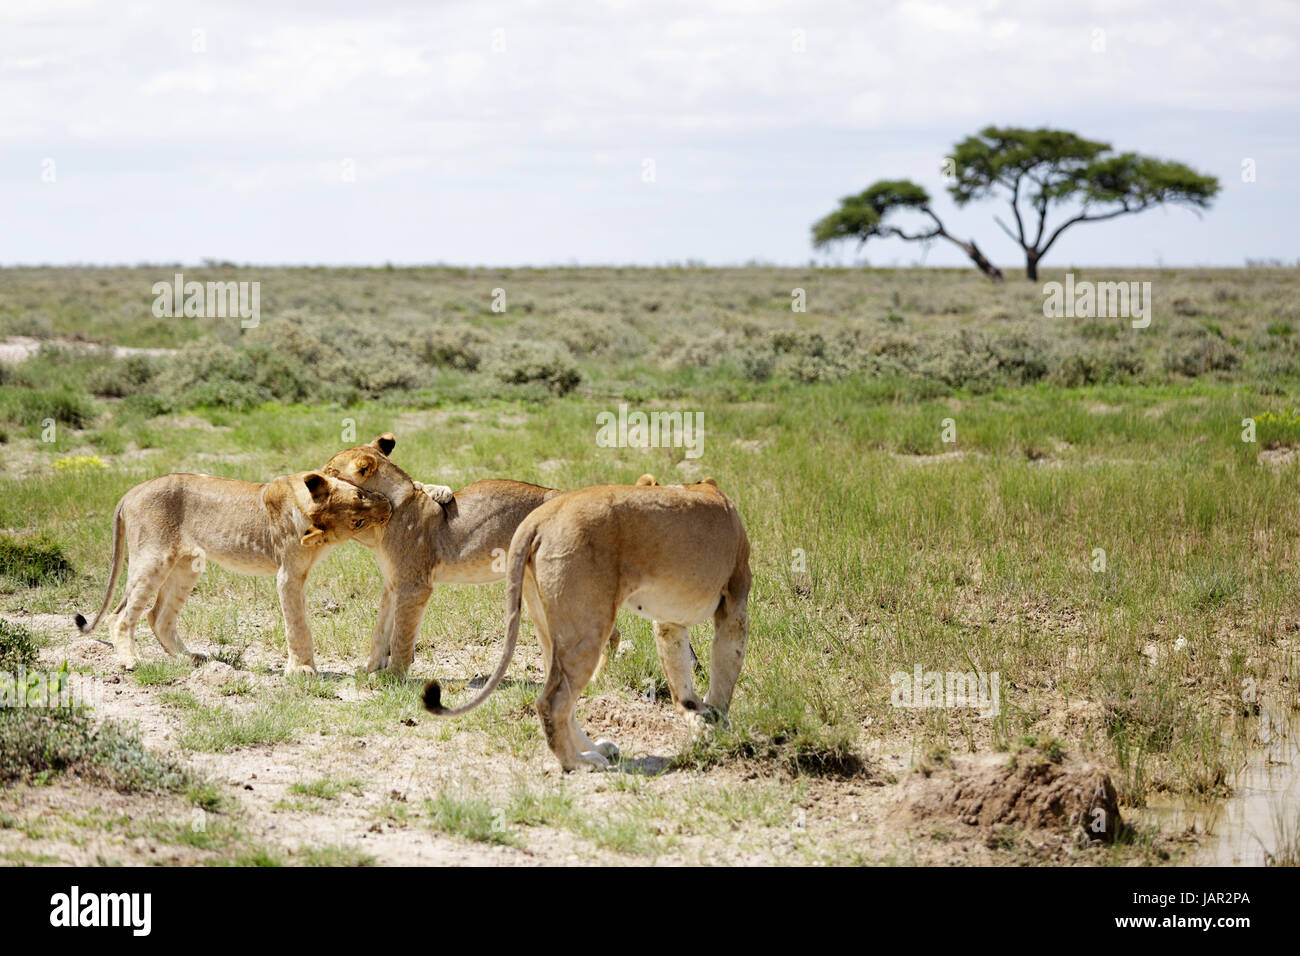 three lions by a water hole, Etosha National Park, Namibia. Stock Photo